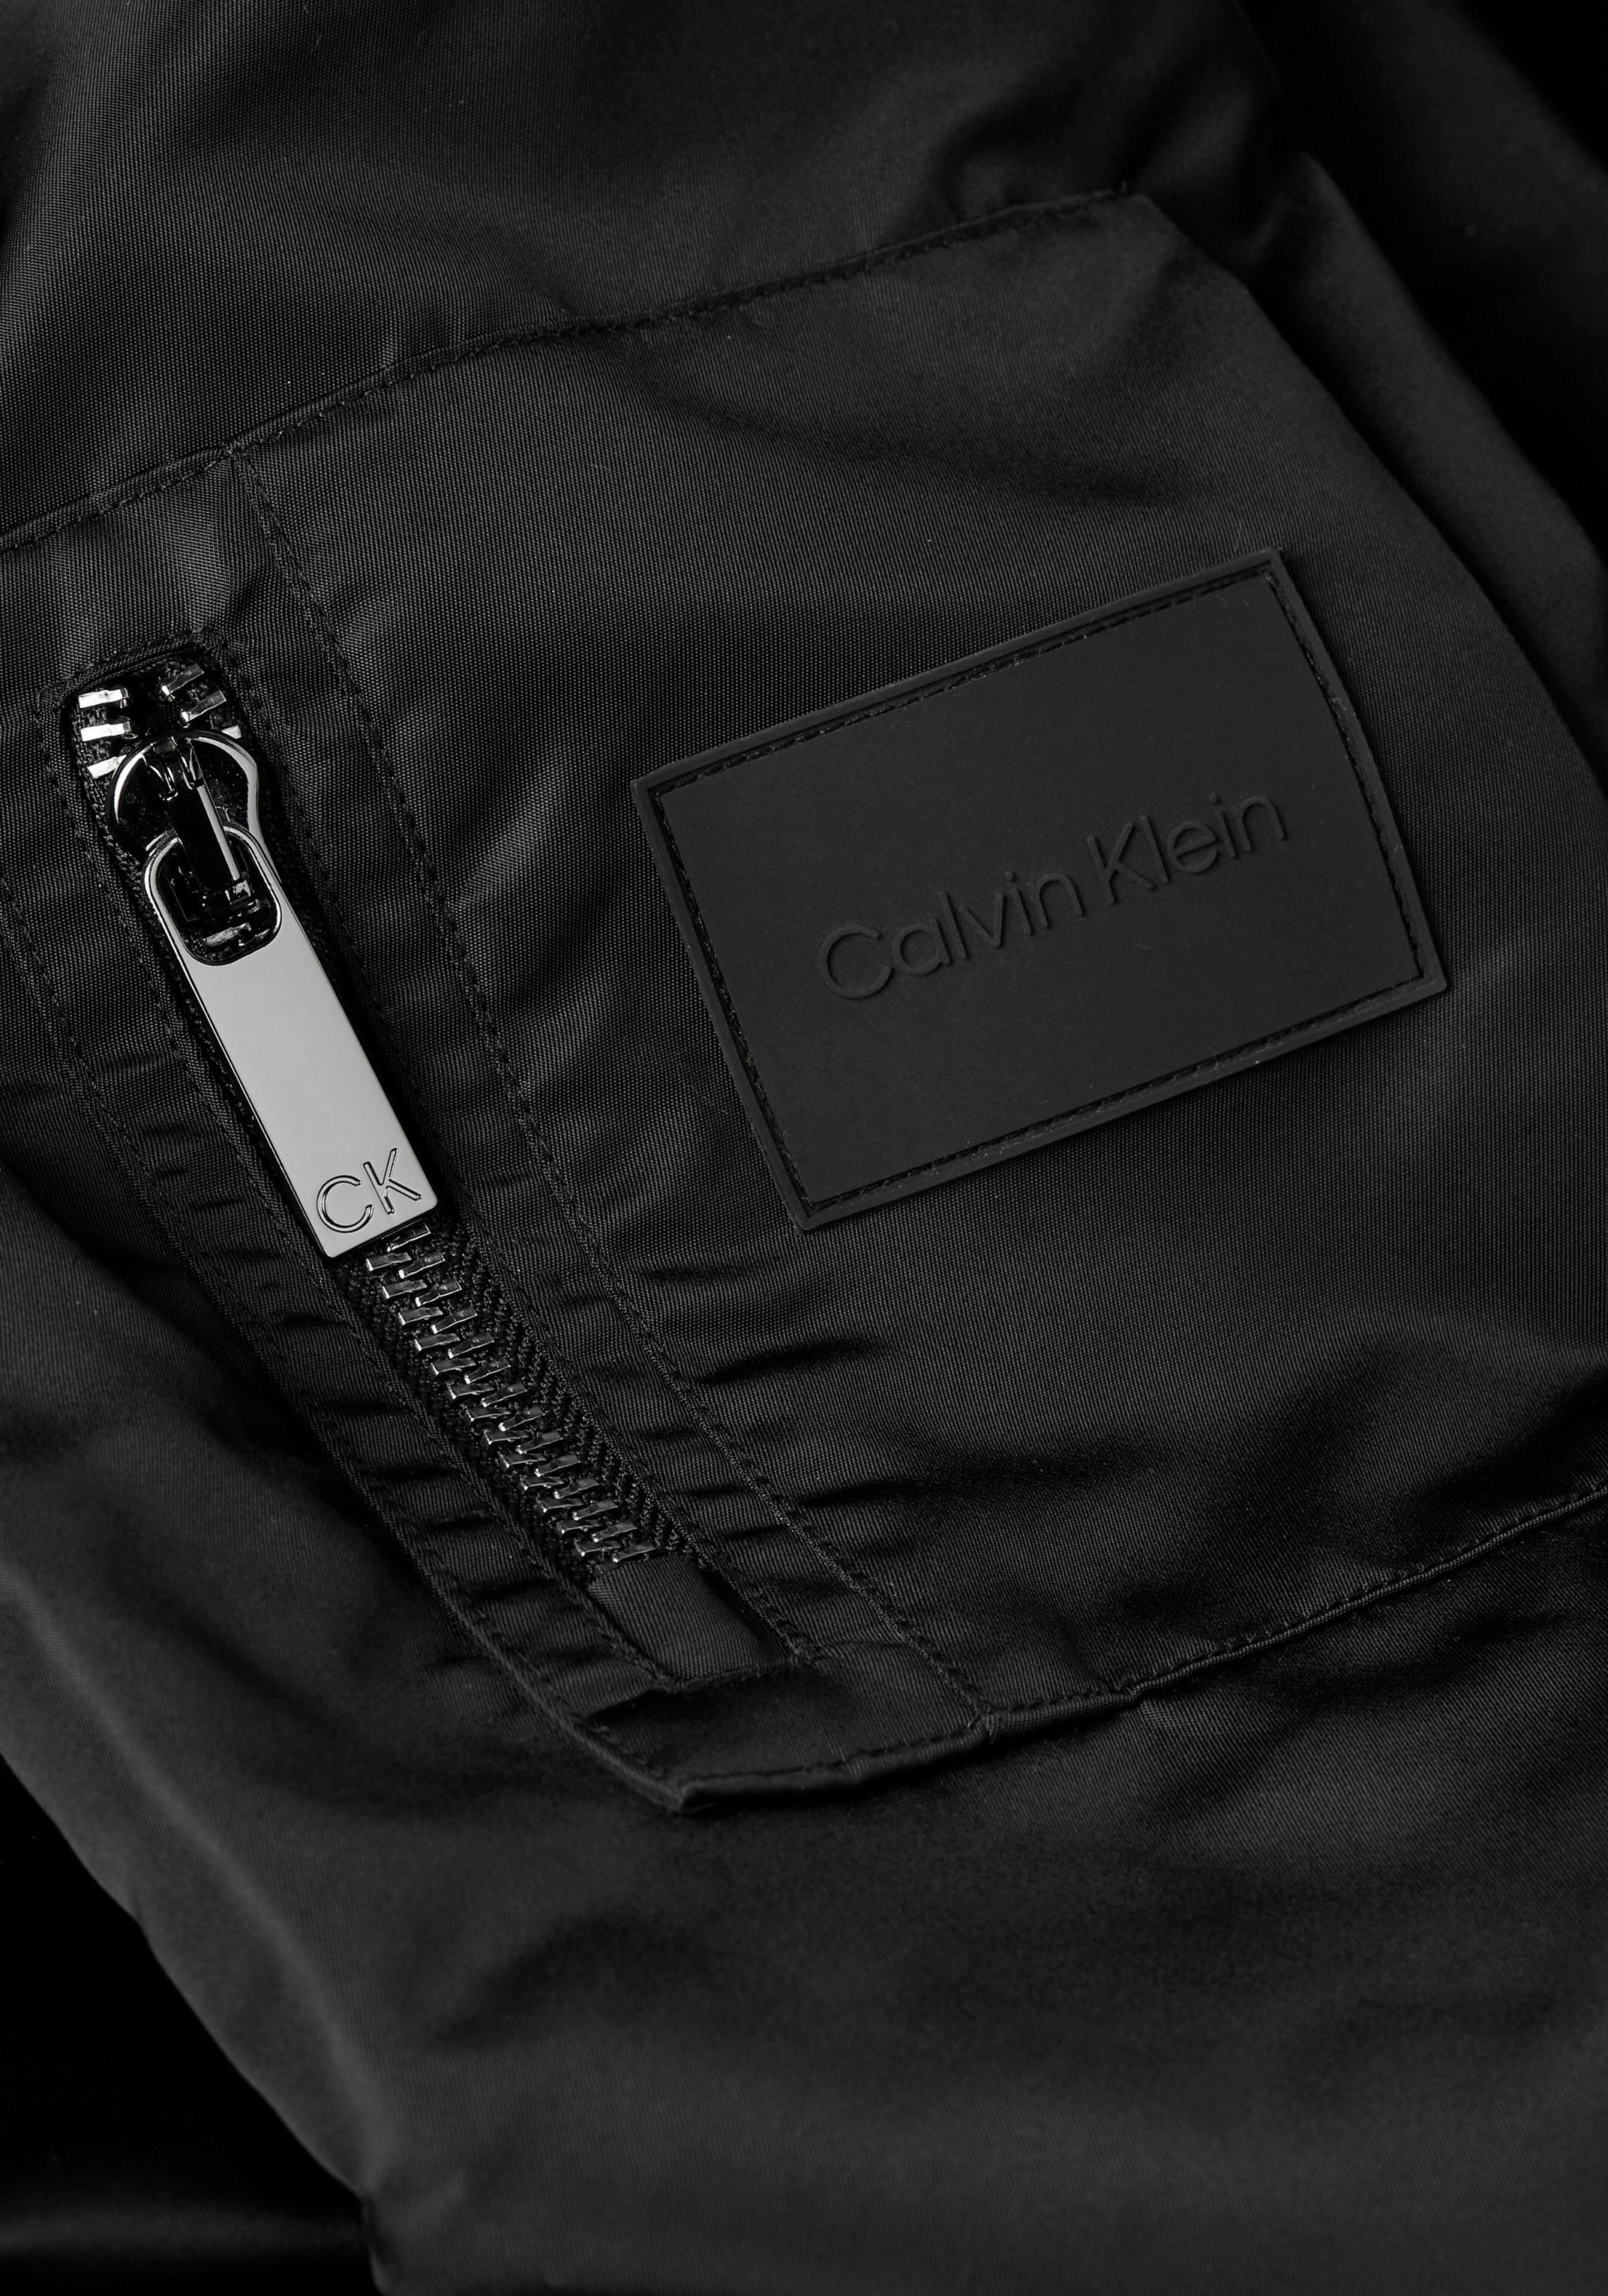 Calvin Klein Bomberjacke schwarz am LIGHTWEIGHT BOMBERJACKET HERO Ärmel Reißverschluss mit